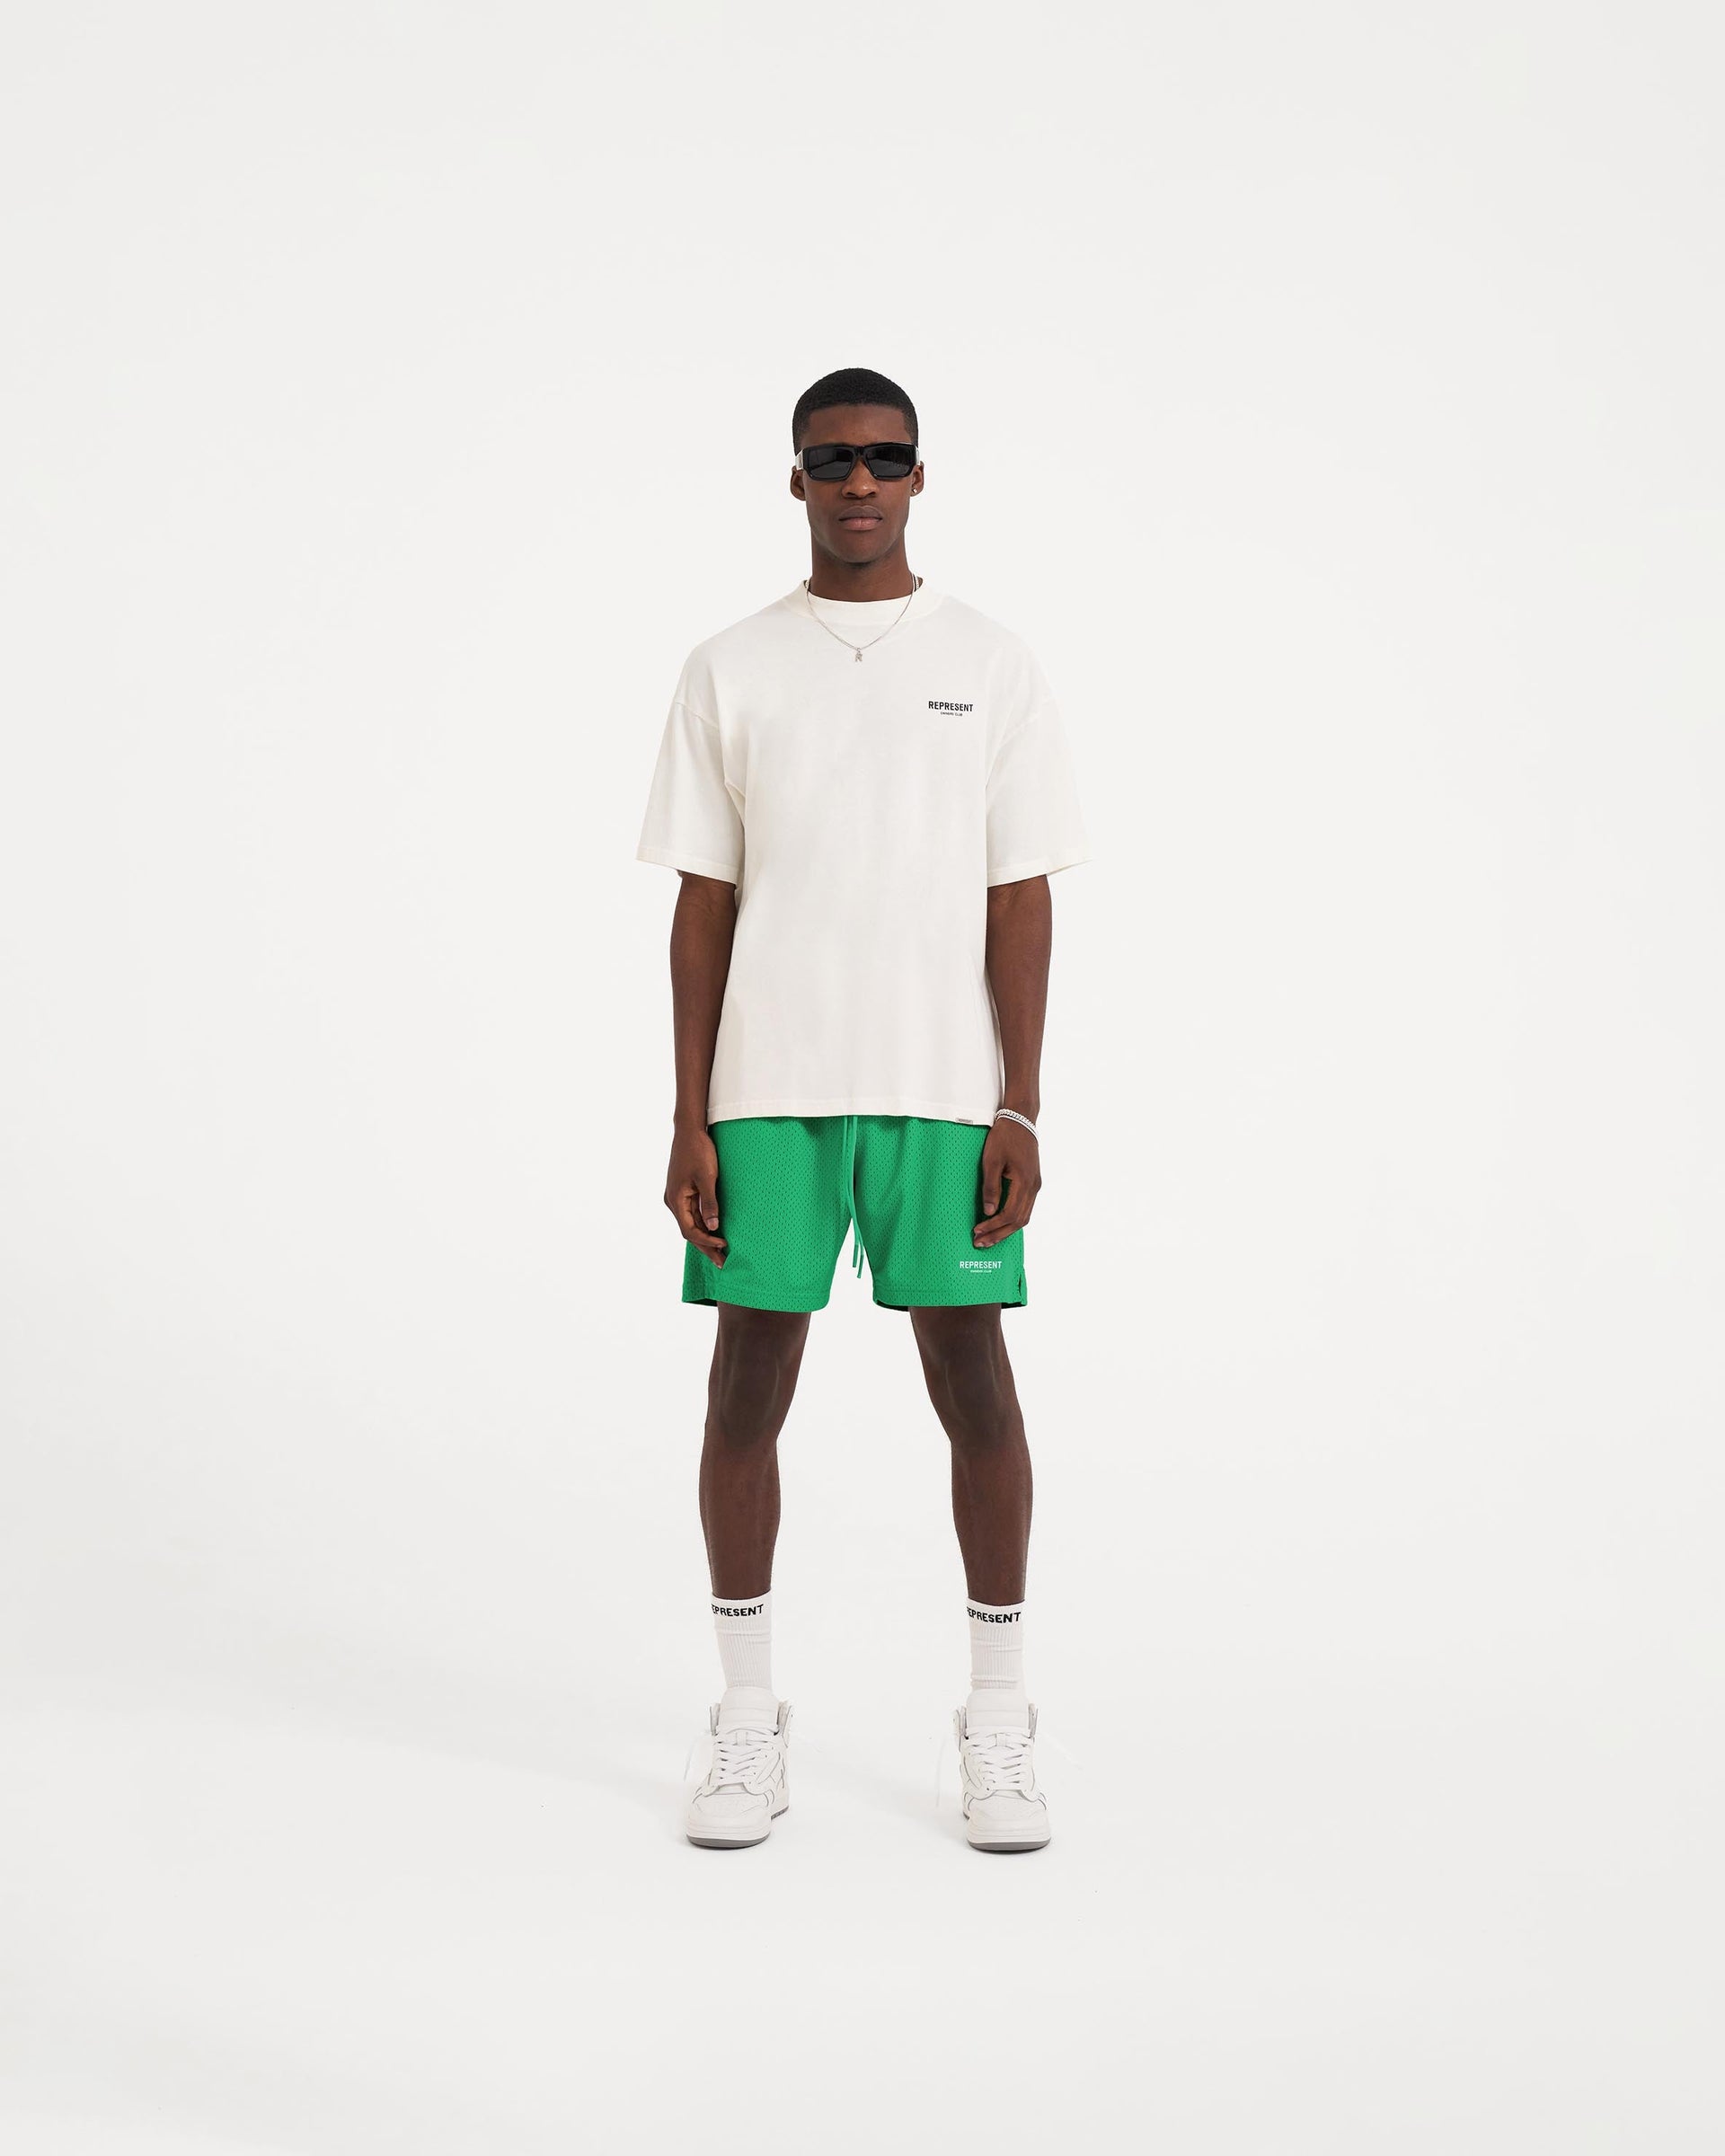 Island Green Mesh Shorts | Owners' Club | REPRESENT CLO